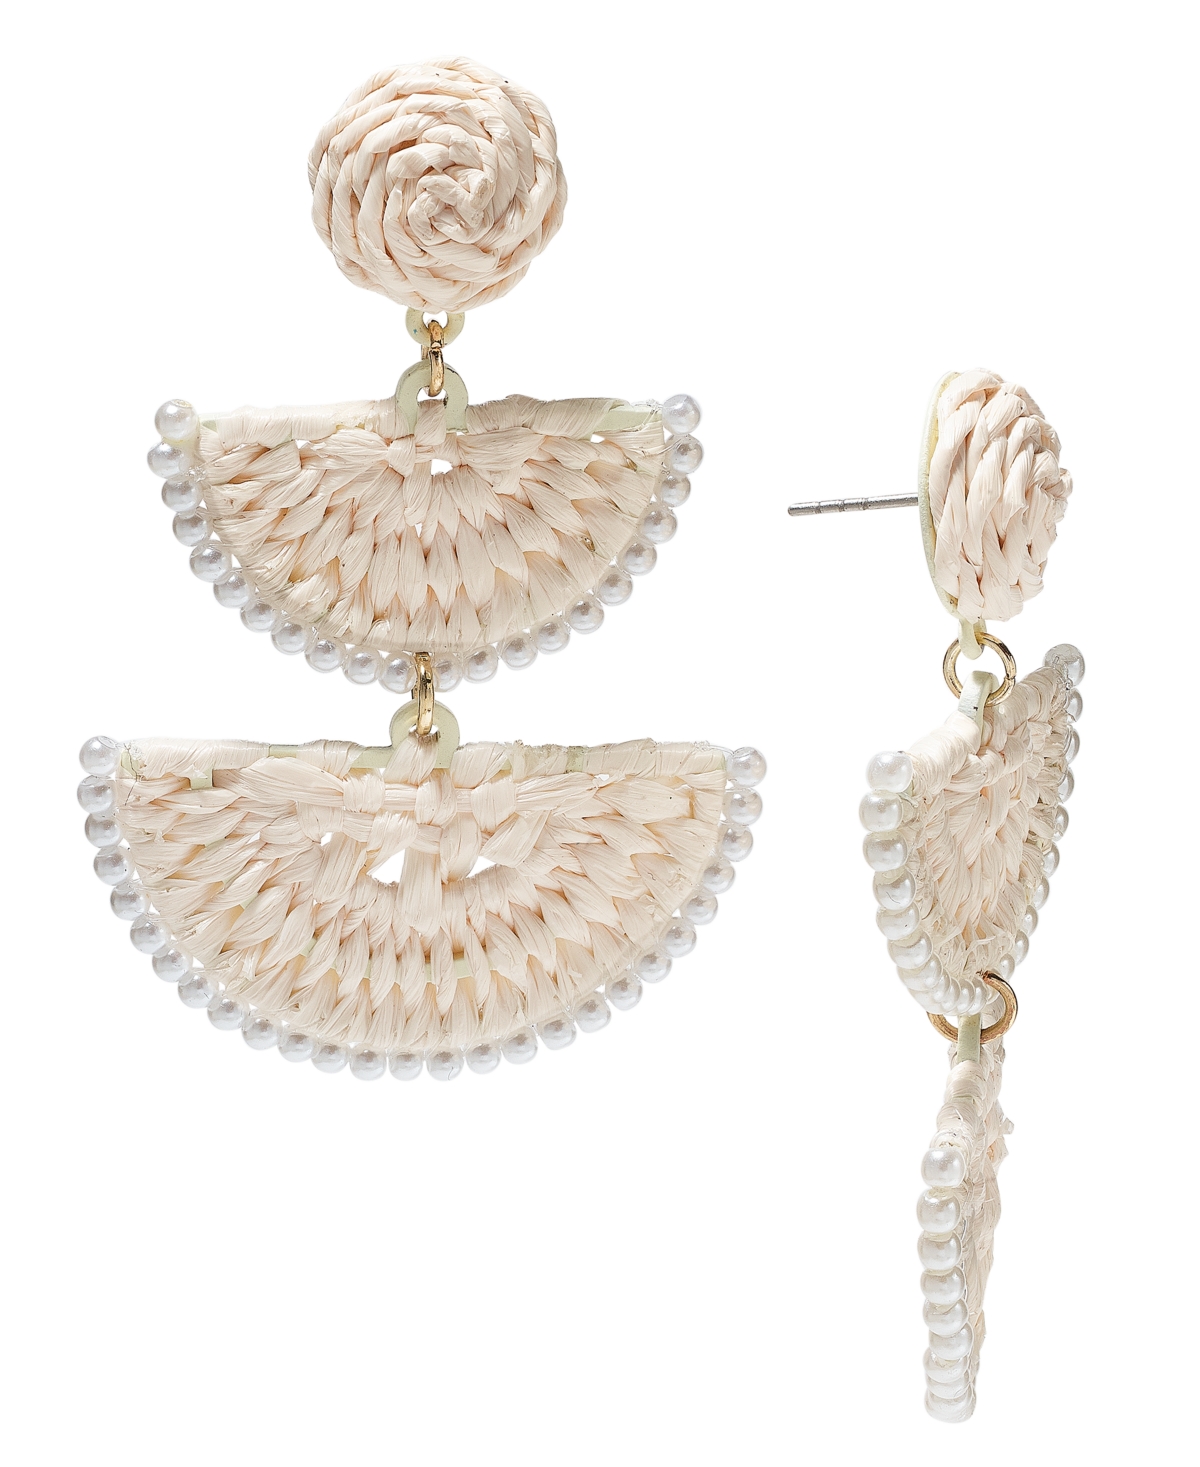 Gold-Tone Stone Bead & Woven Raffia Drop Earrings, Created for Macy's - Blue